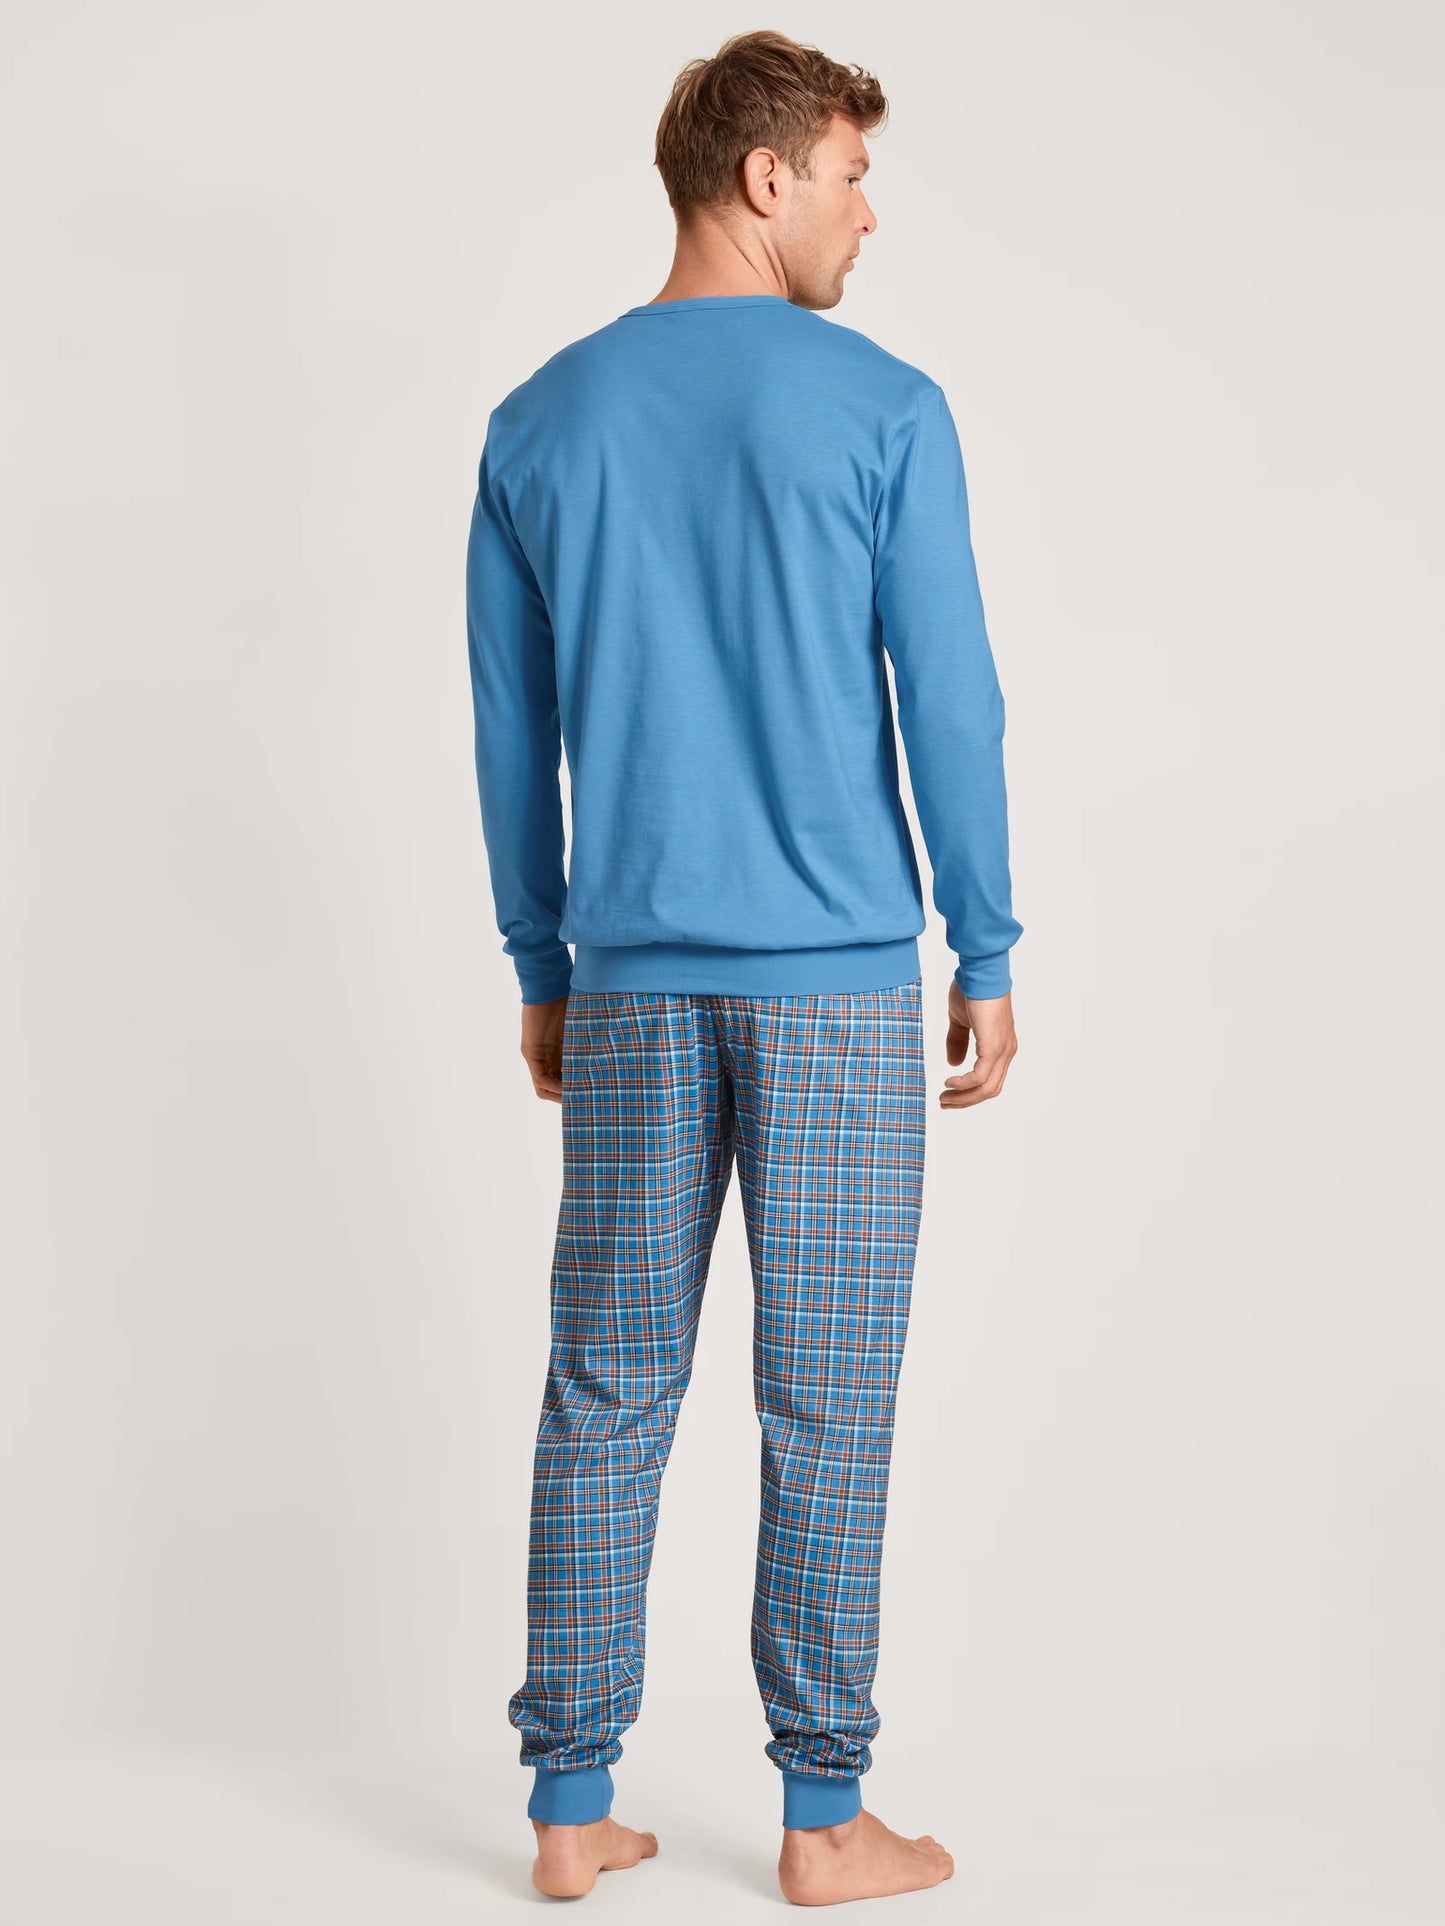 CALIDA Men's V Neck Cotton Knit Cuffs Pajamas Set 44684